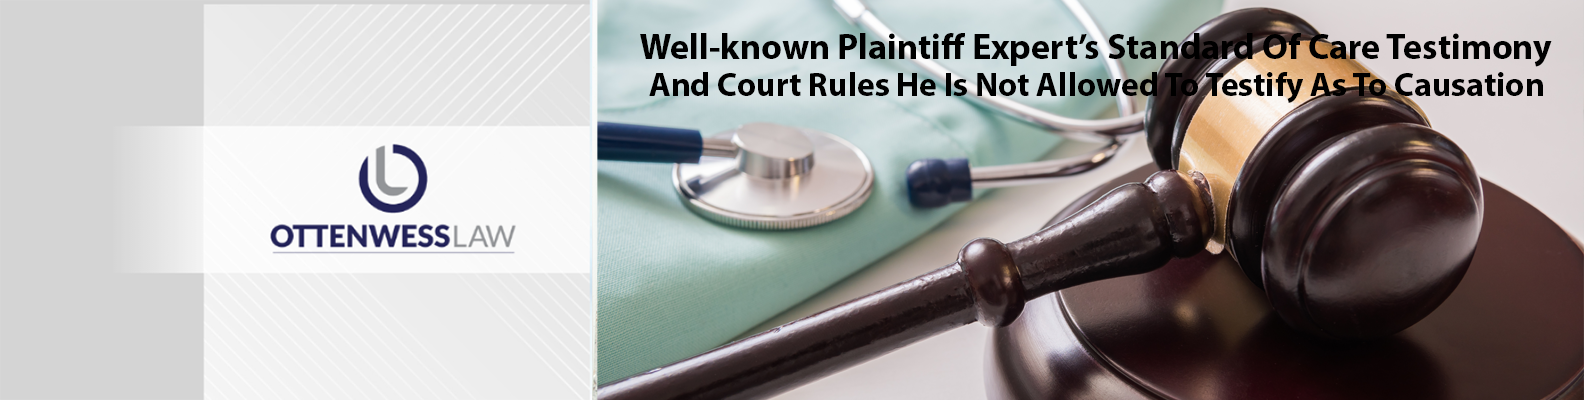 Well-known plaintiff expert’s standard of care testimony struck